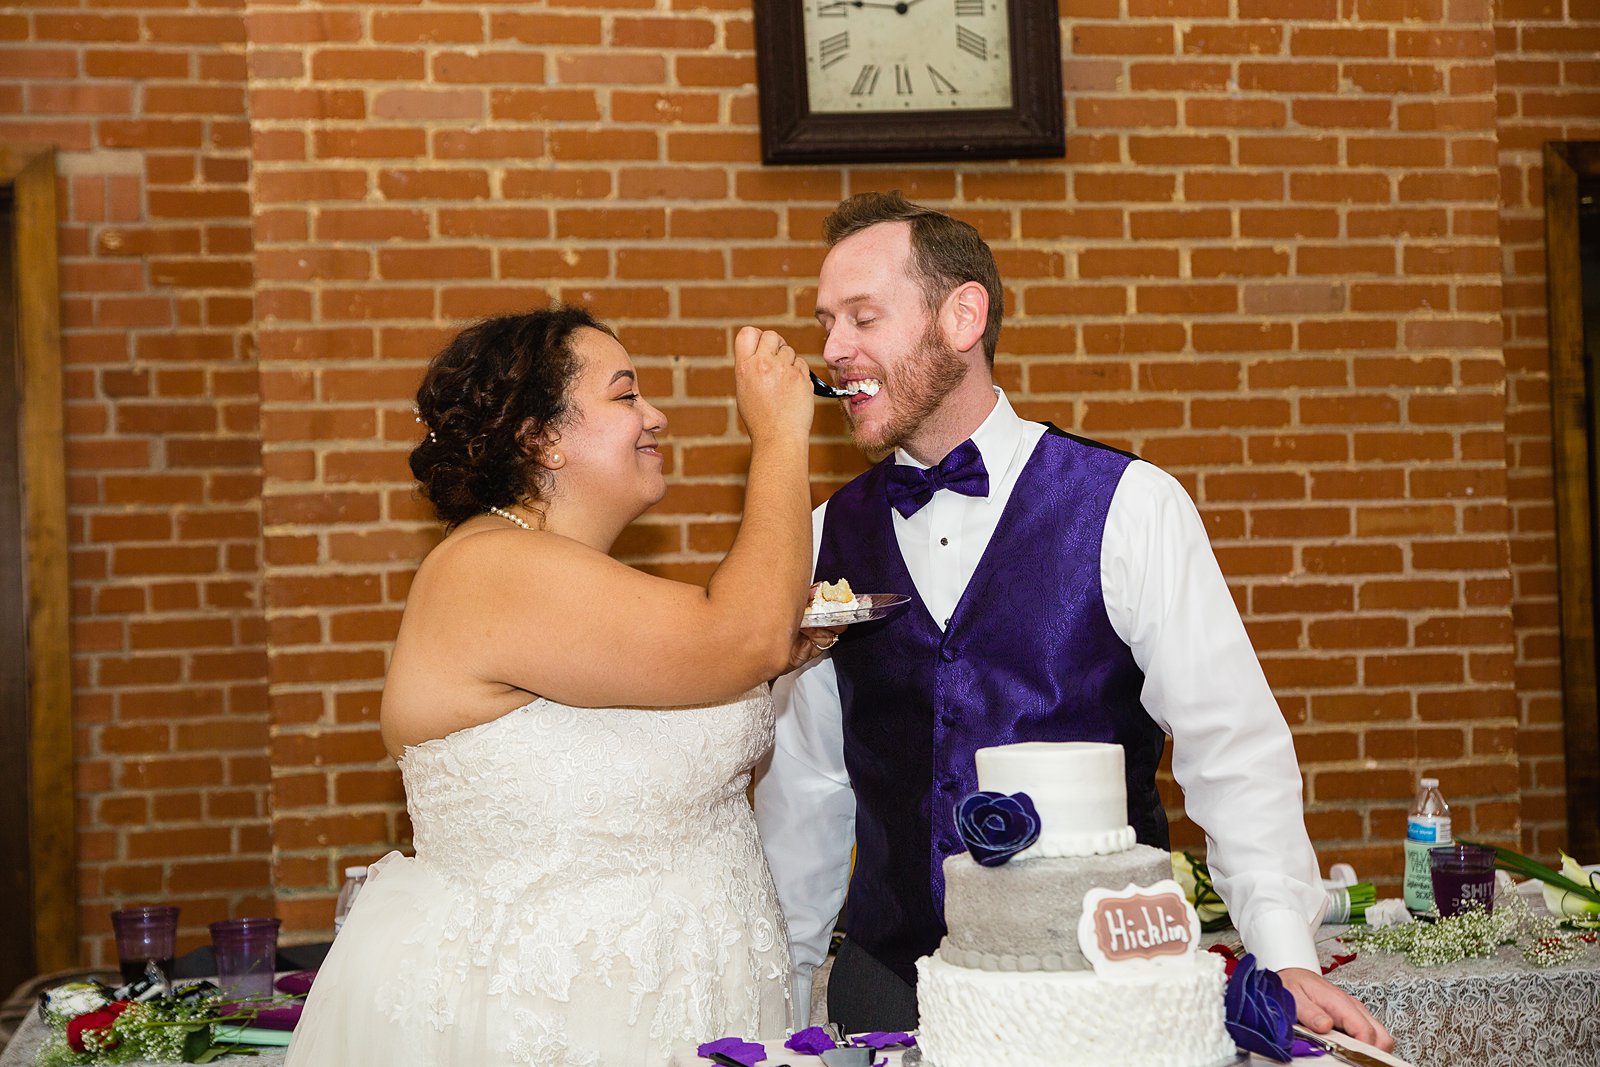 Bride and groom cutting their wedding cake at their Encanto Park wedding reception by Arizona wedding photographer PMA Photography.